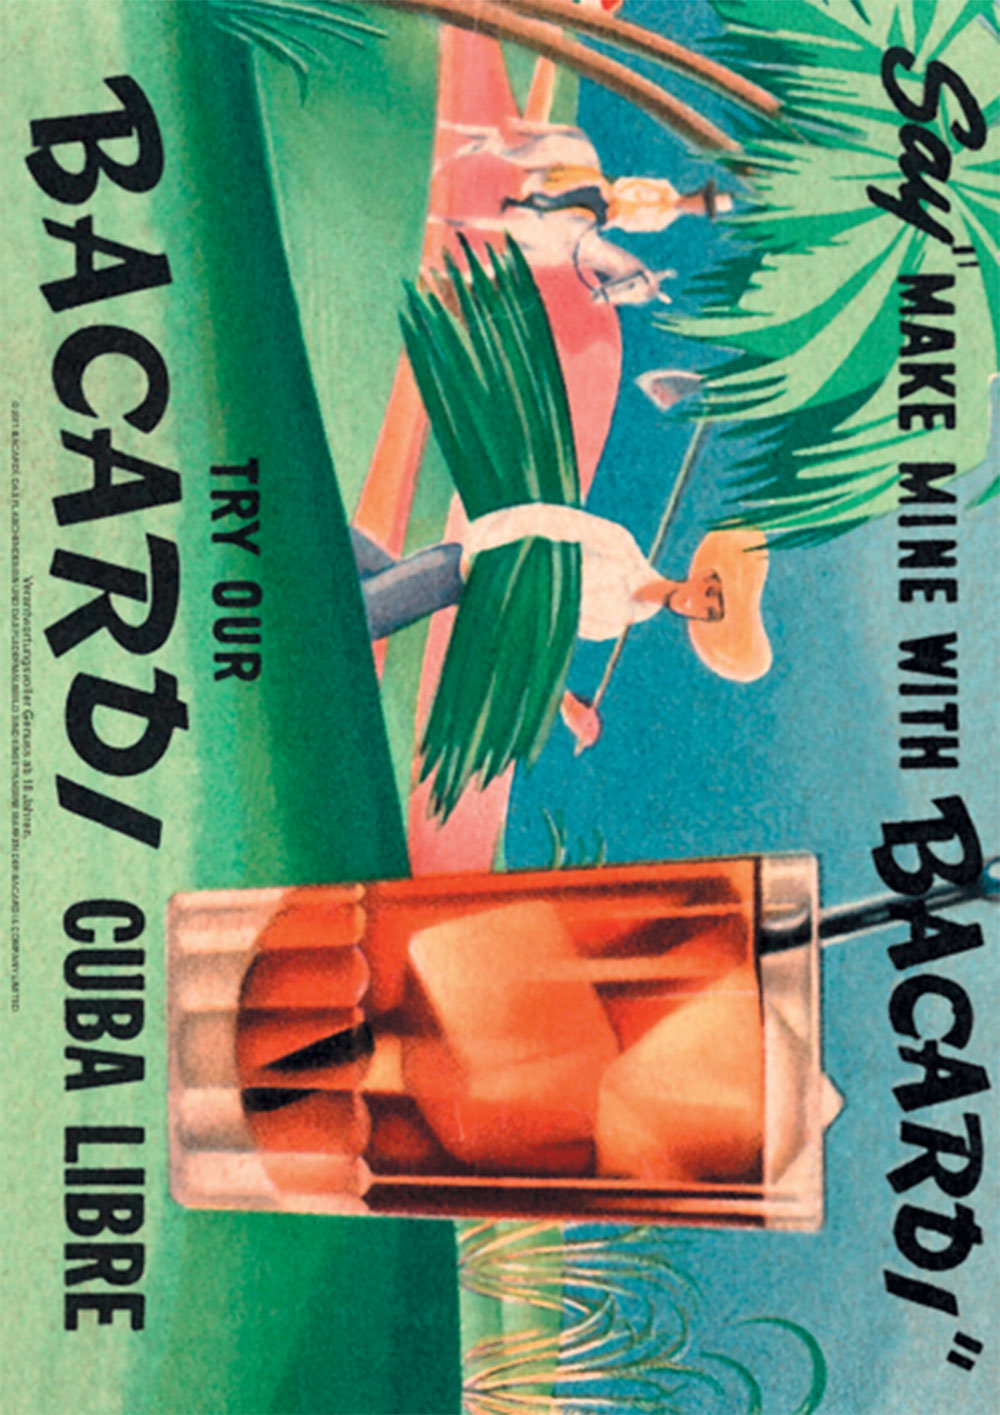 Cuba Libre Set - Bacardi Carta Blanca Rum 0,7l 700ml (37,5% Vol) + 4x Coca Cola 0,2L - Inkl. Pfand MEHRWEG